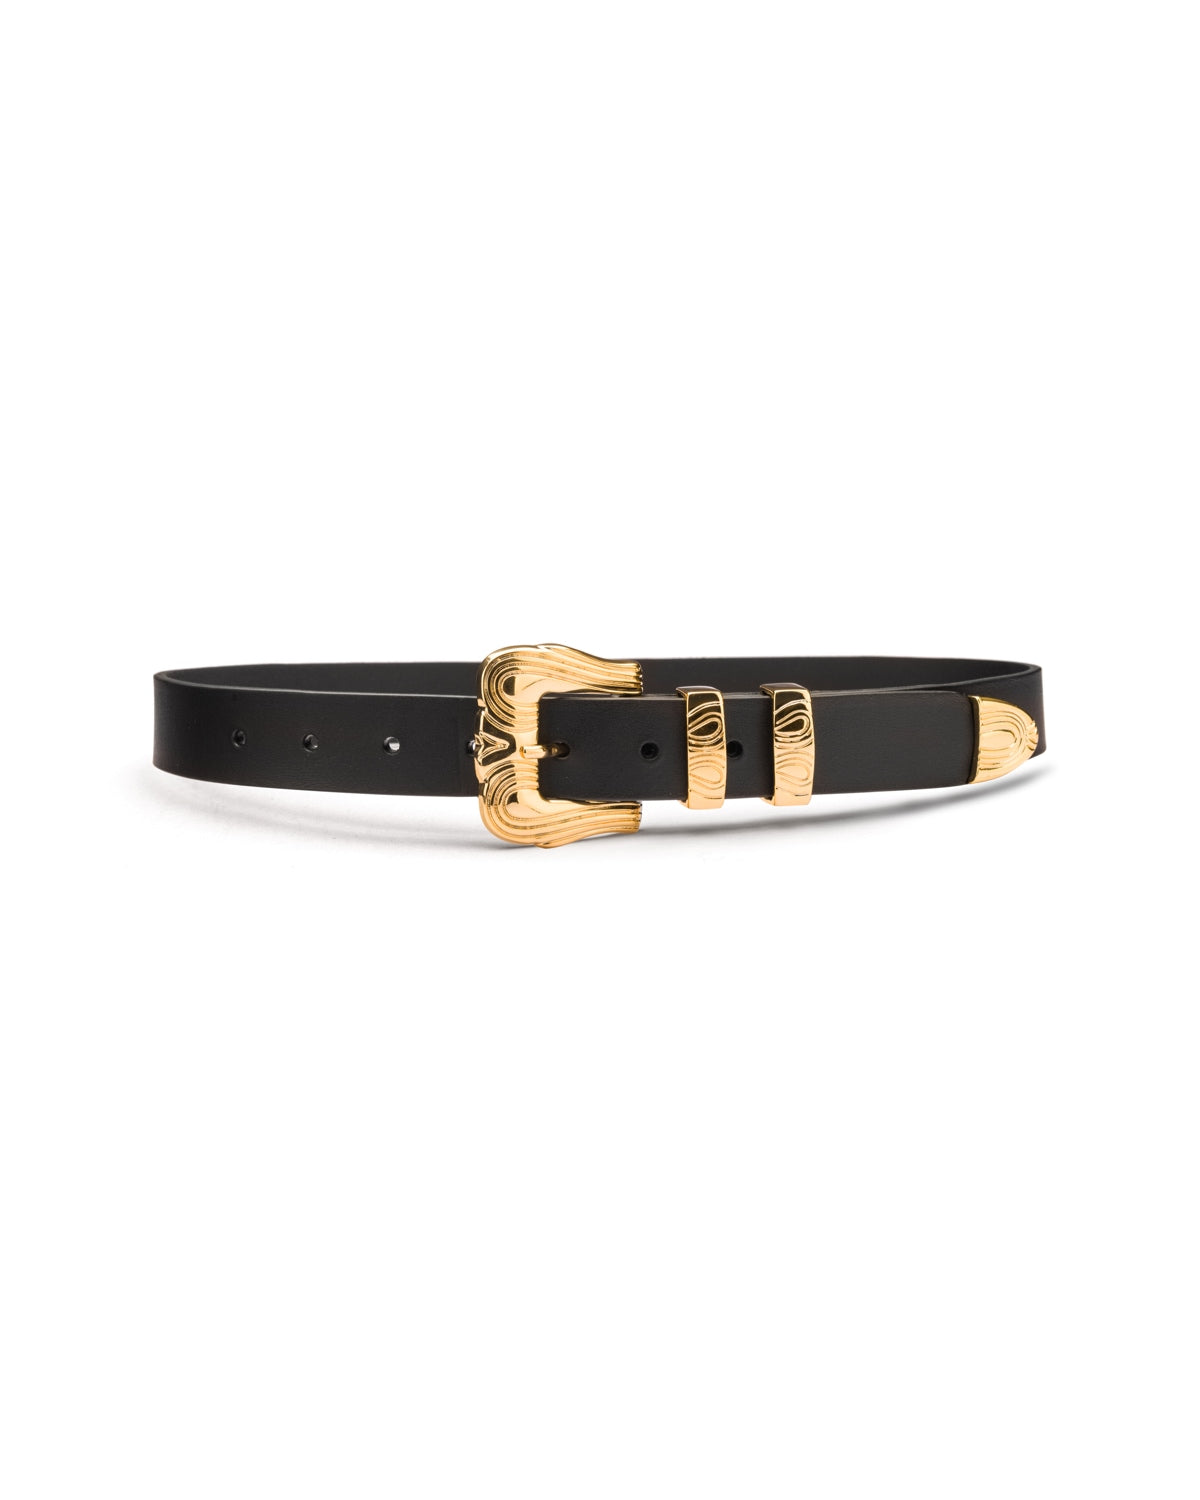 India black leather waist belt